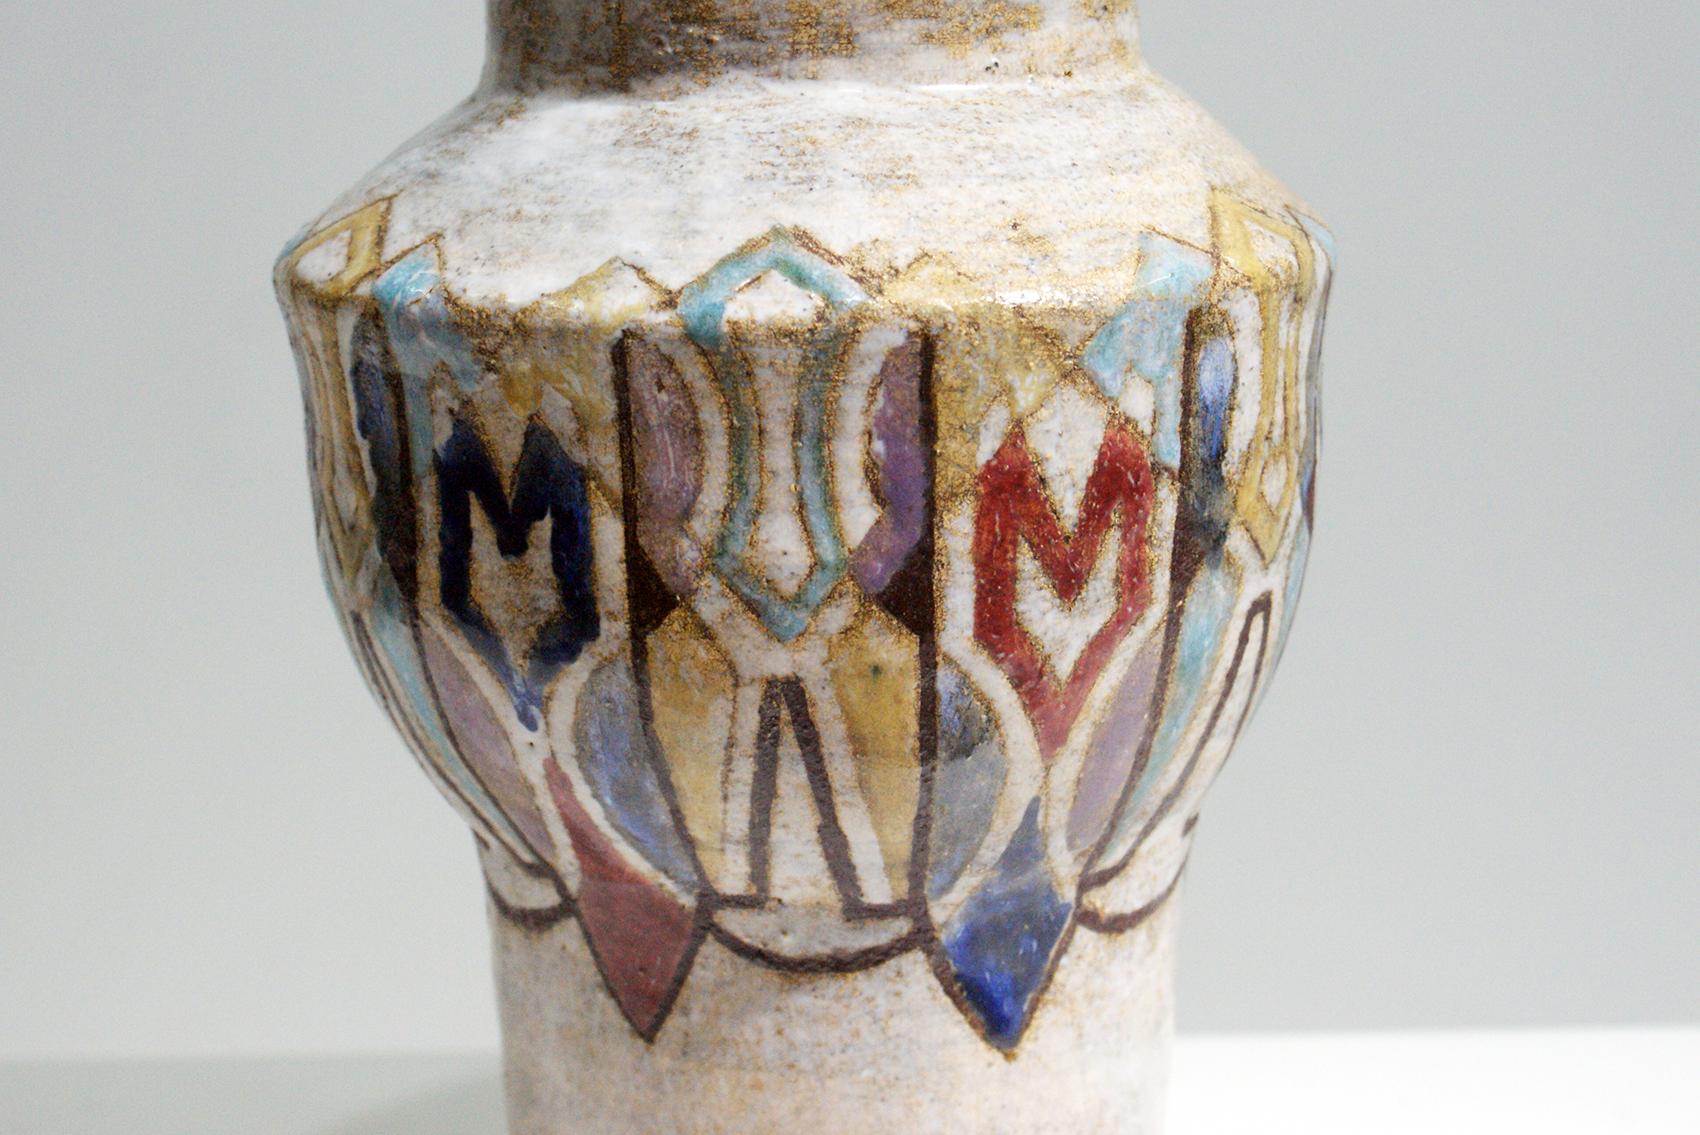 French Beautiful Colored Ceramic Vase Signed “Vallauris”, circa 1950s